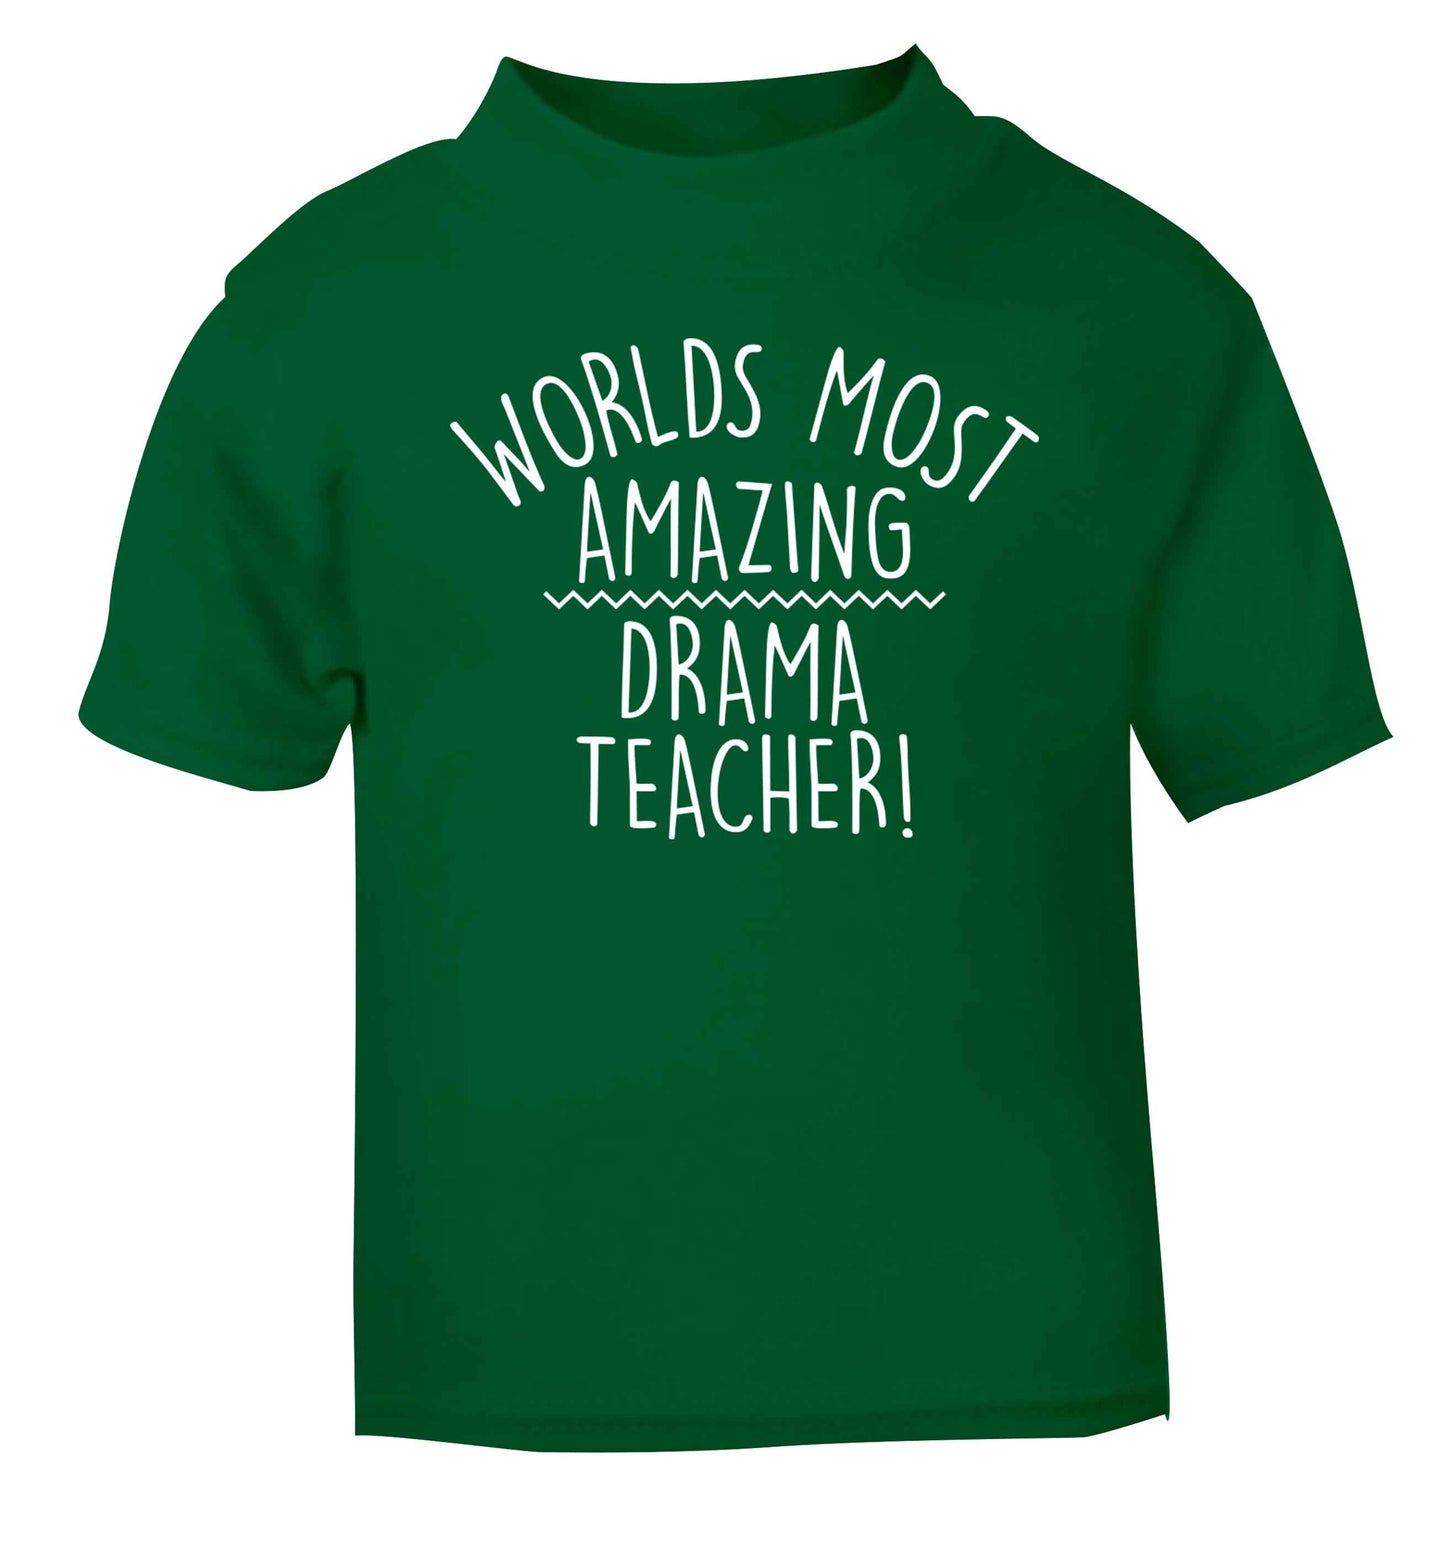 Worlds most amazing drama teacher green baby toddler Tshirt 2 Years